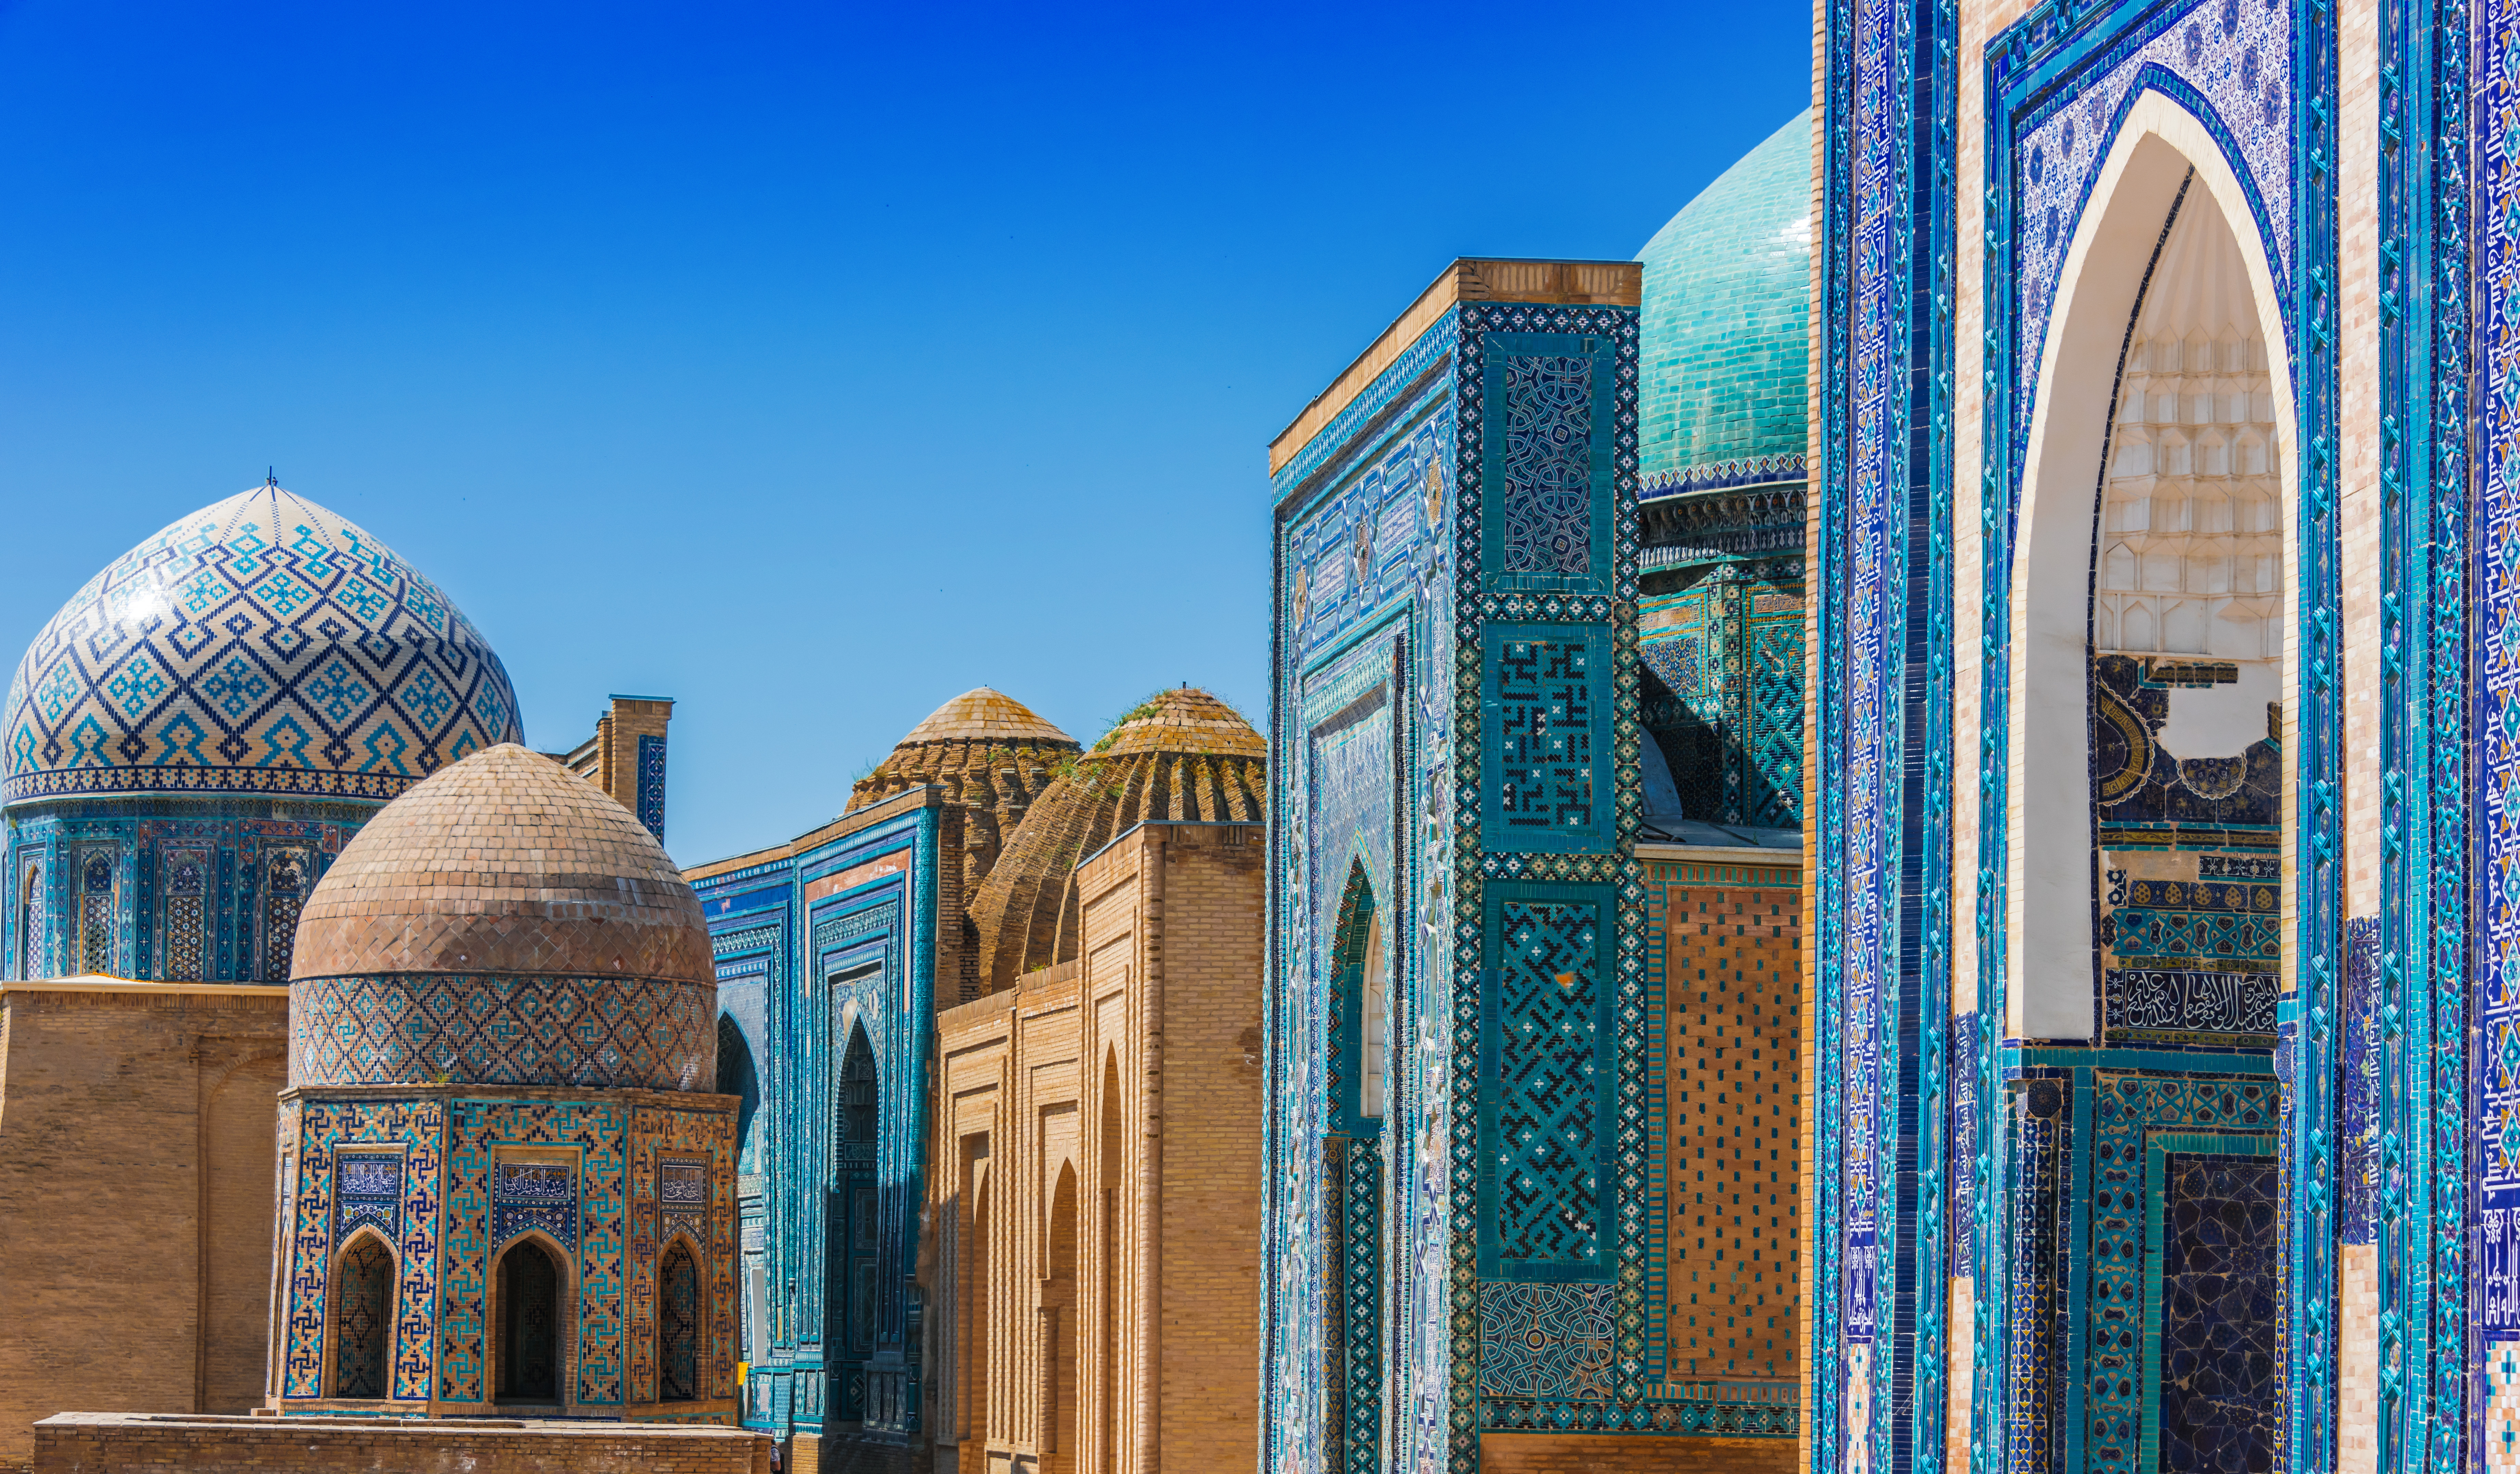 Shah i Zinda, a necropolis in Samarkand, Uzbekistan